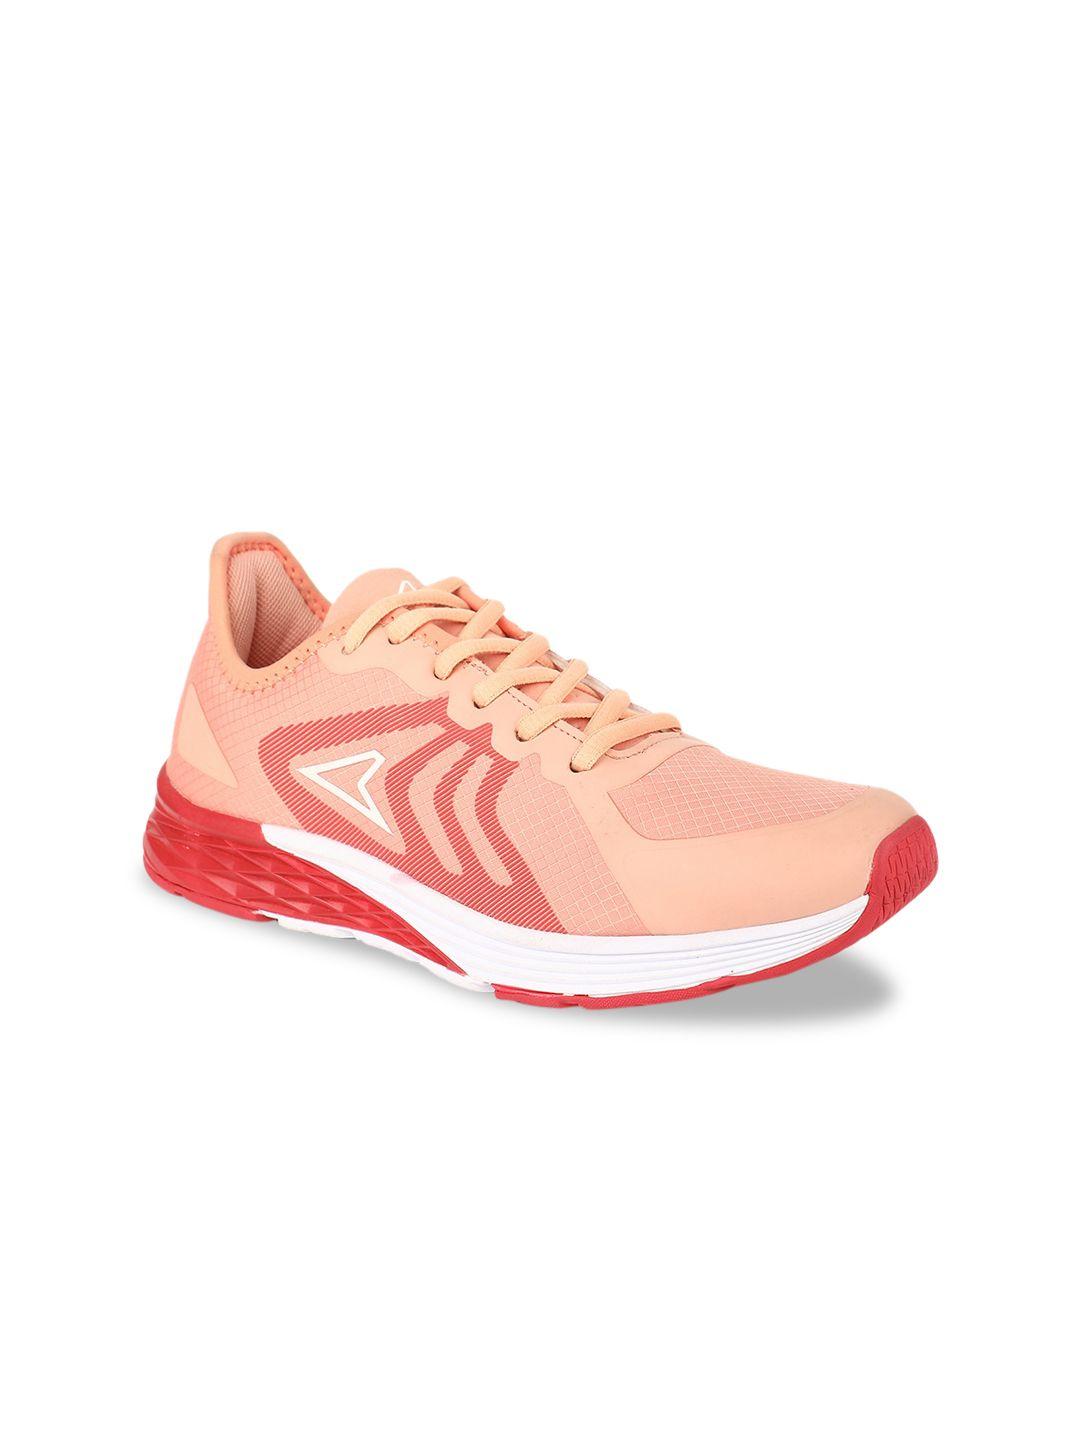 power women peach-coloured textile running shoes